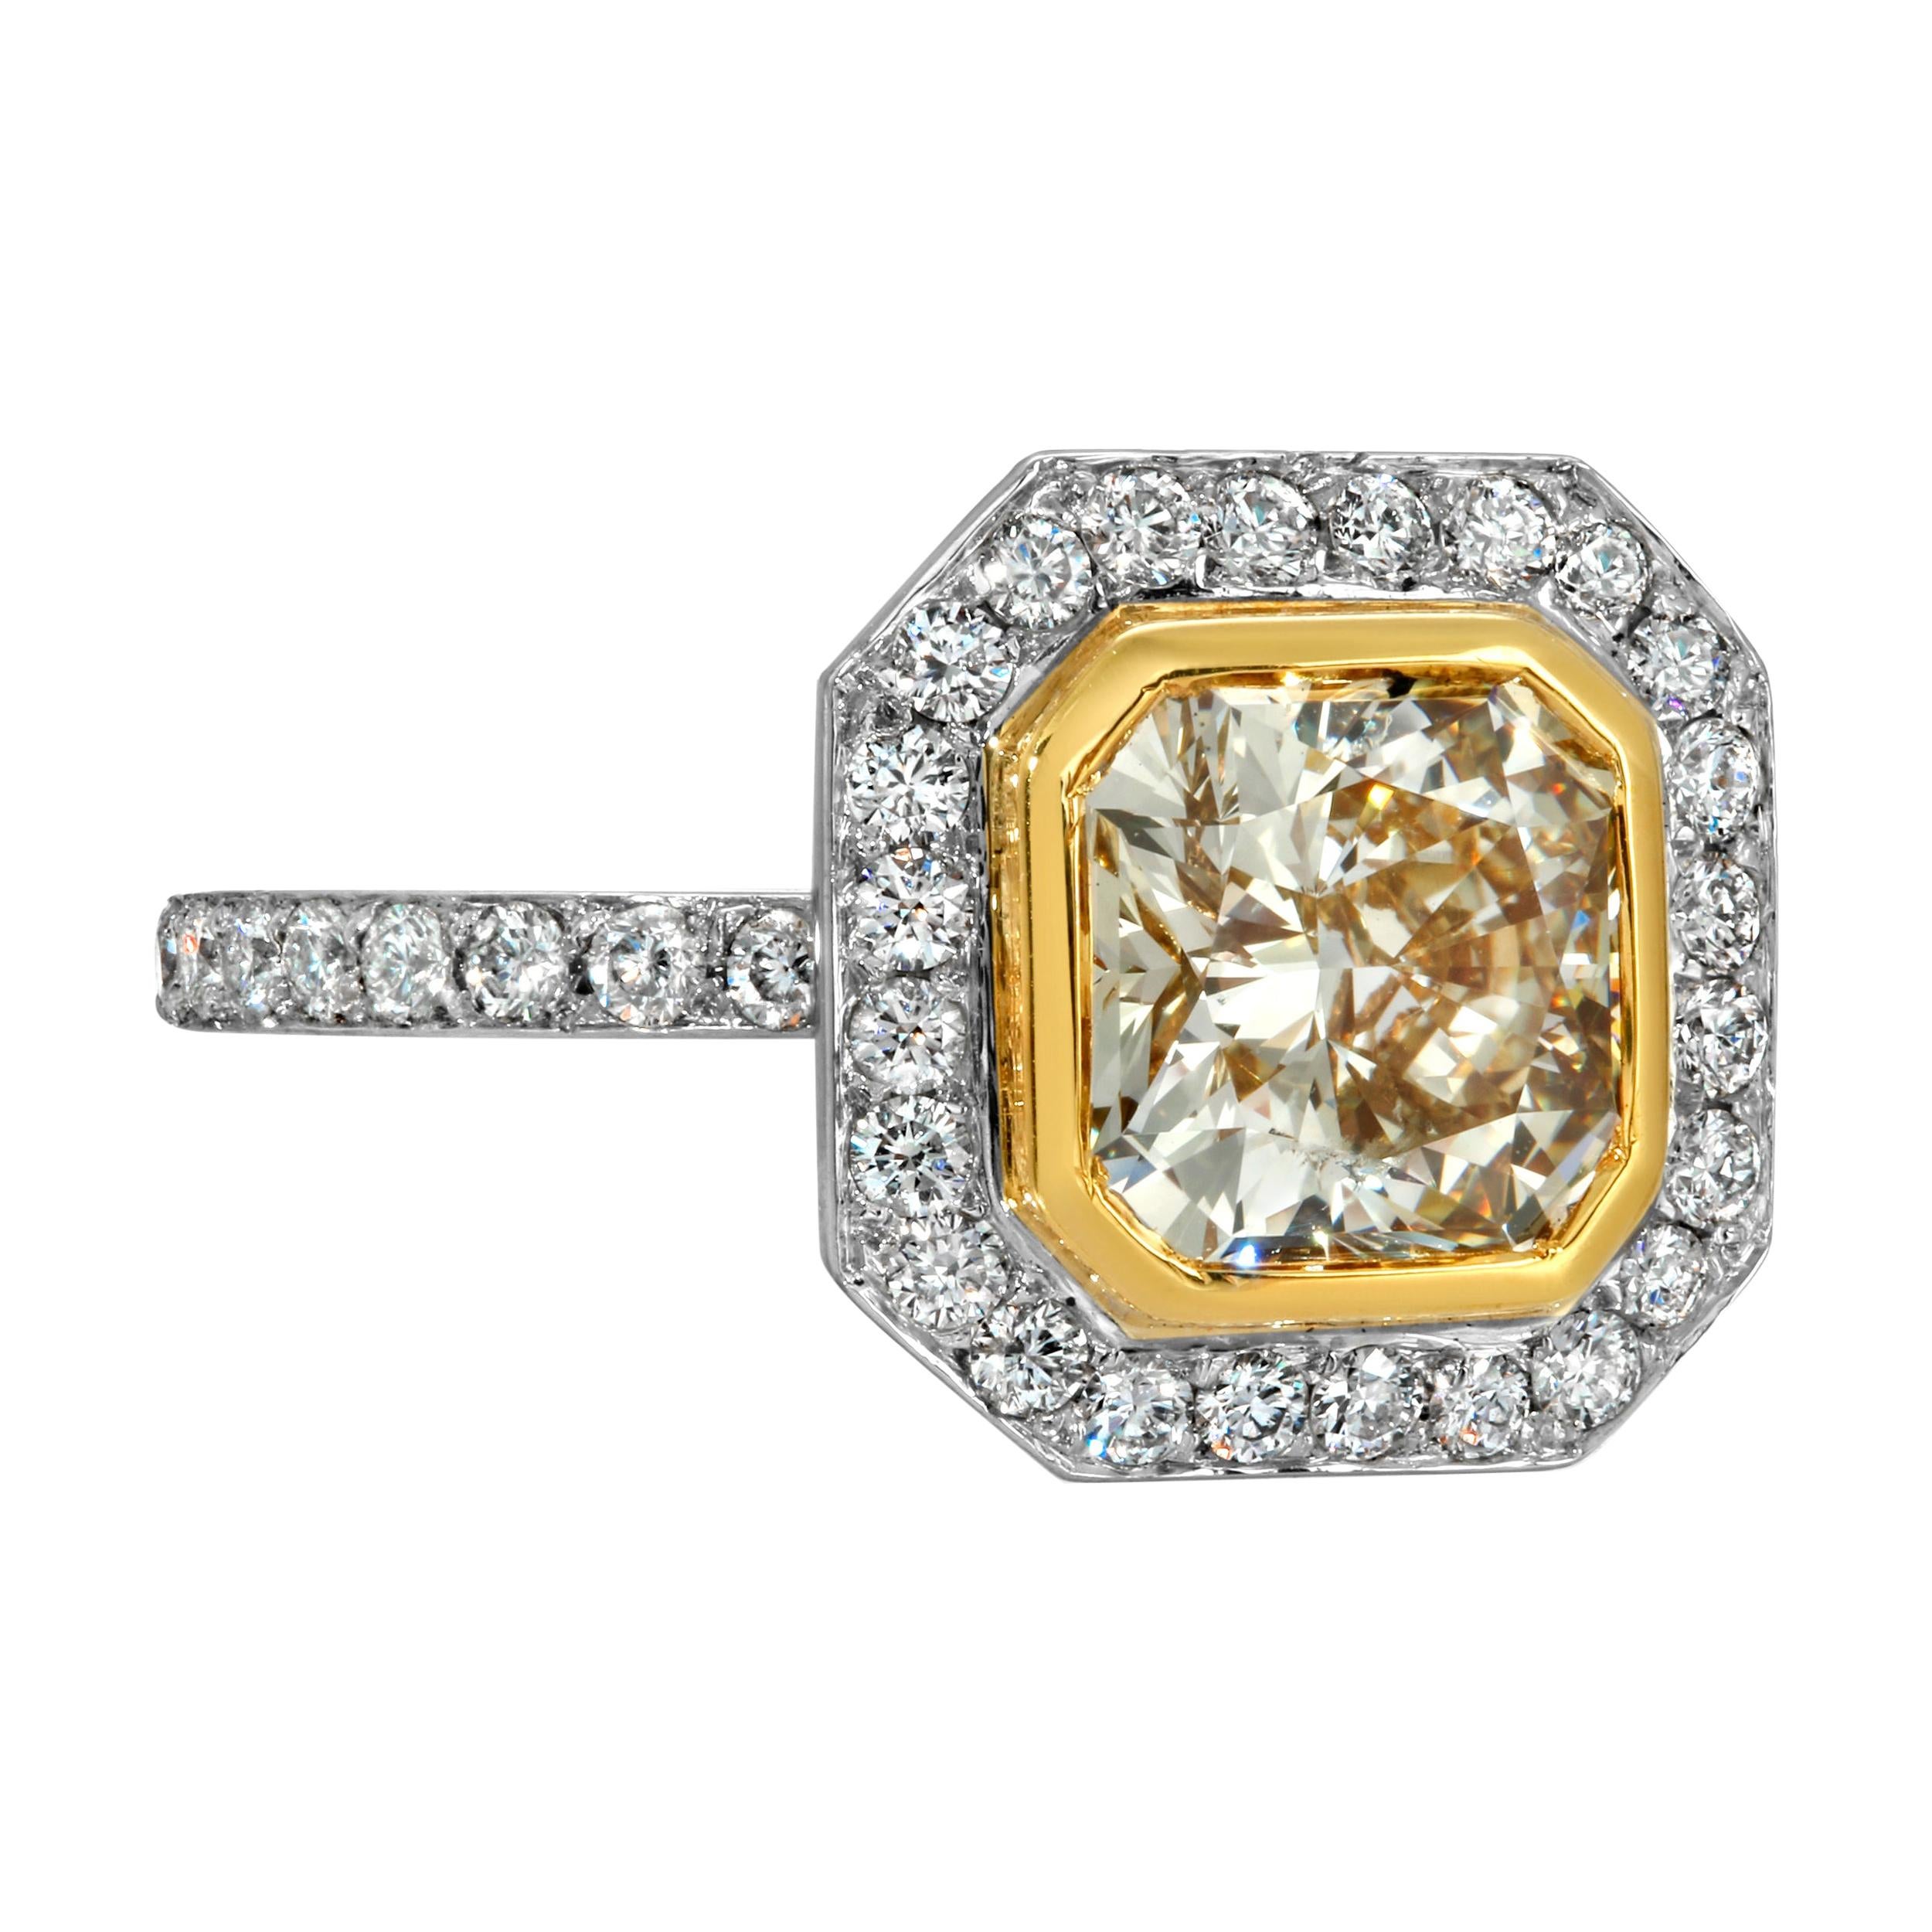 Fancy Yellow Diamond Ring with GIA 1.98 Carat Platinum/18 Karat Yellow Gold